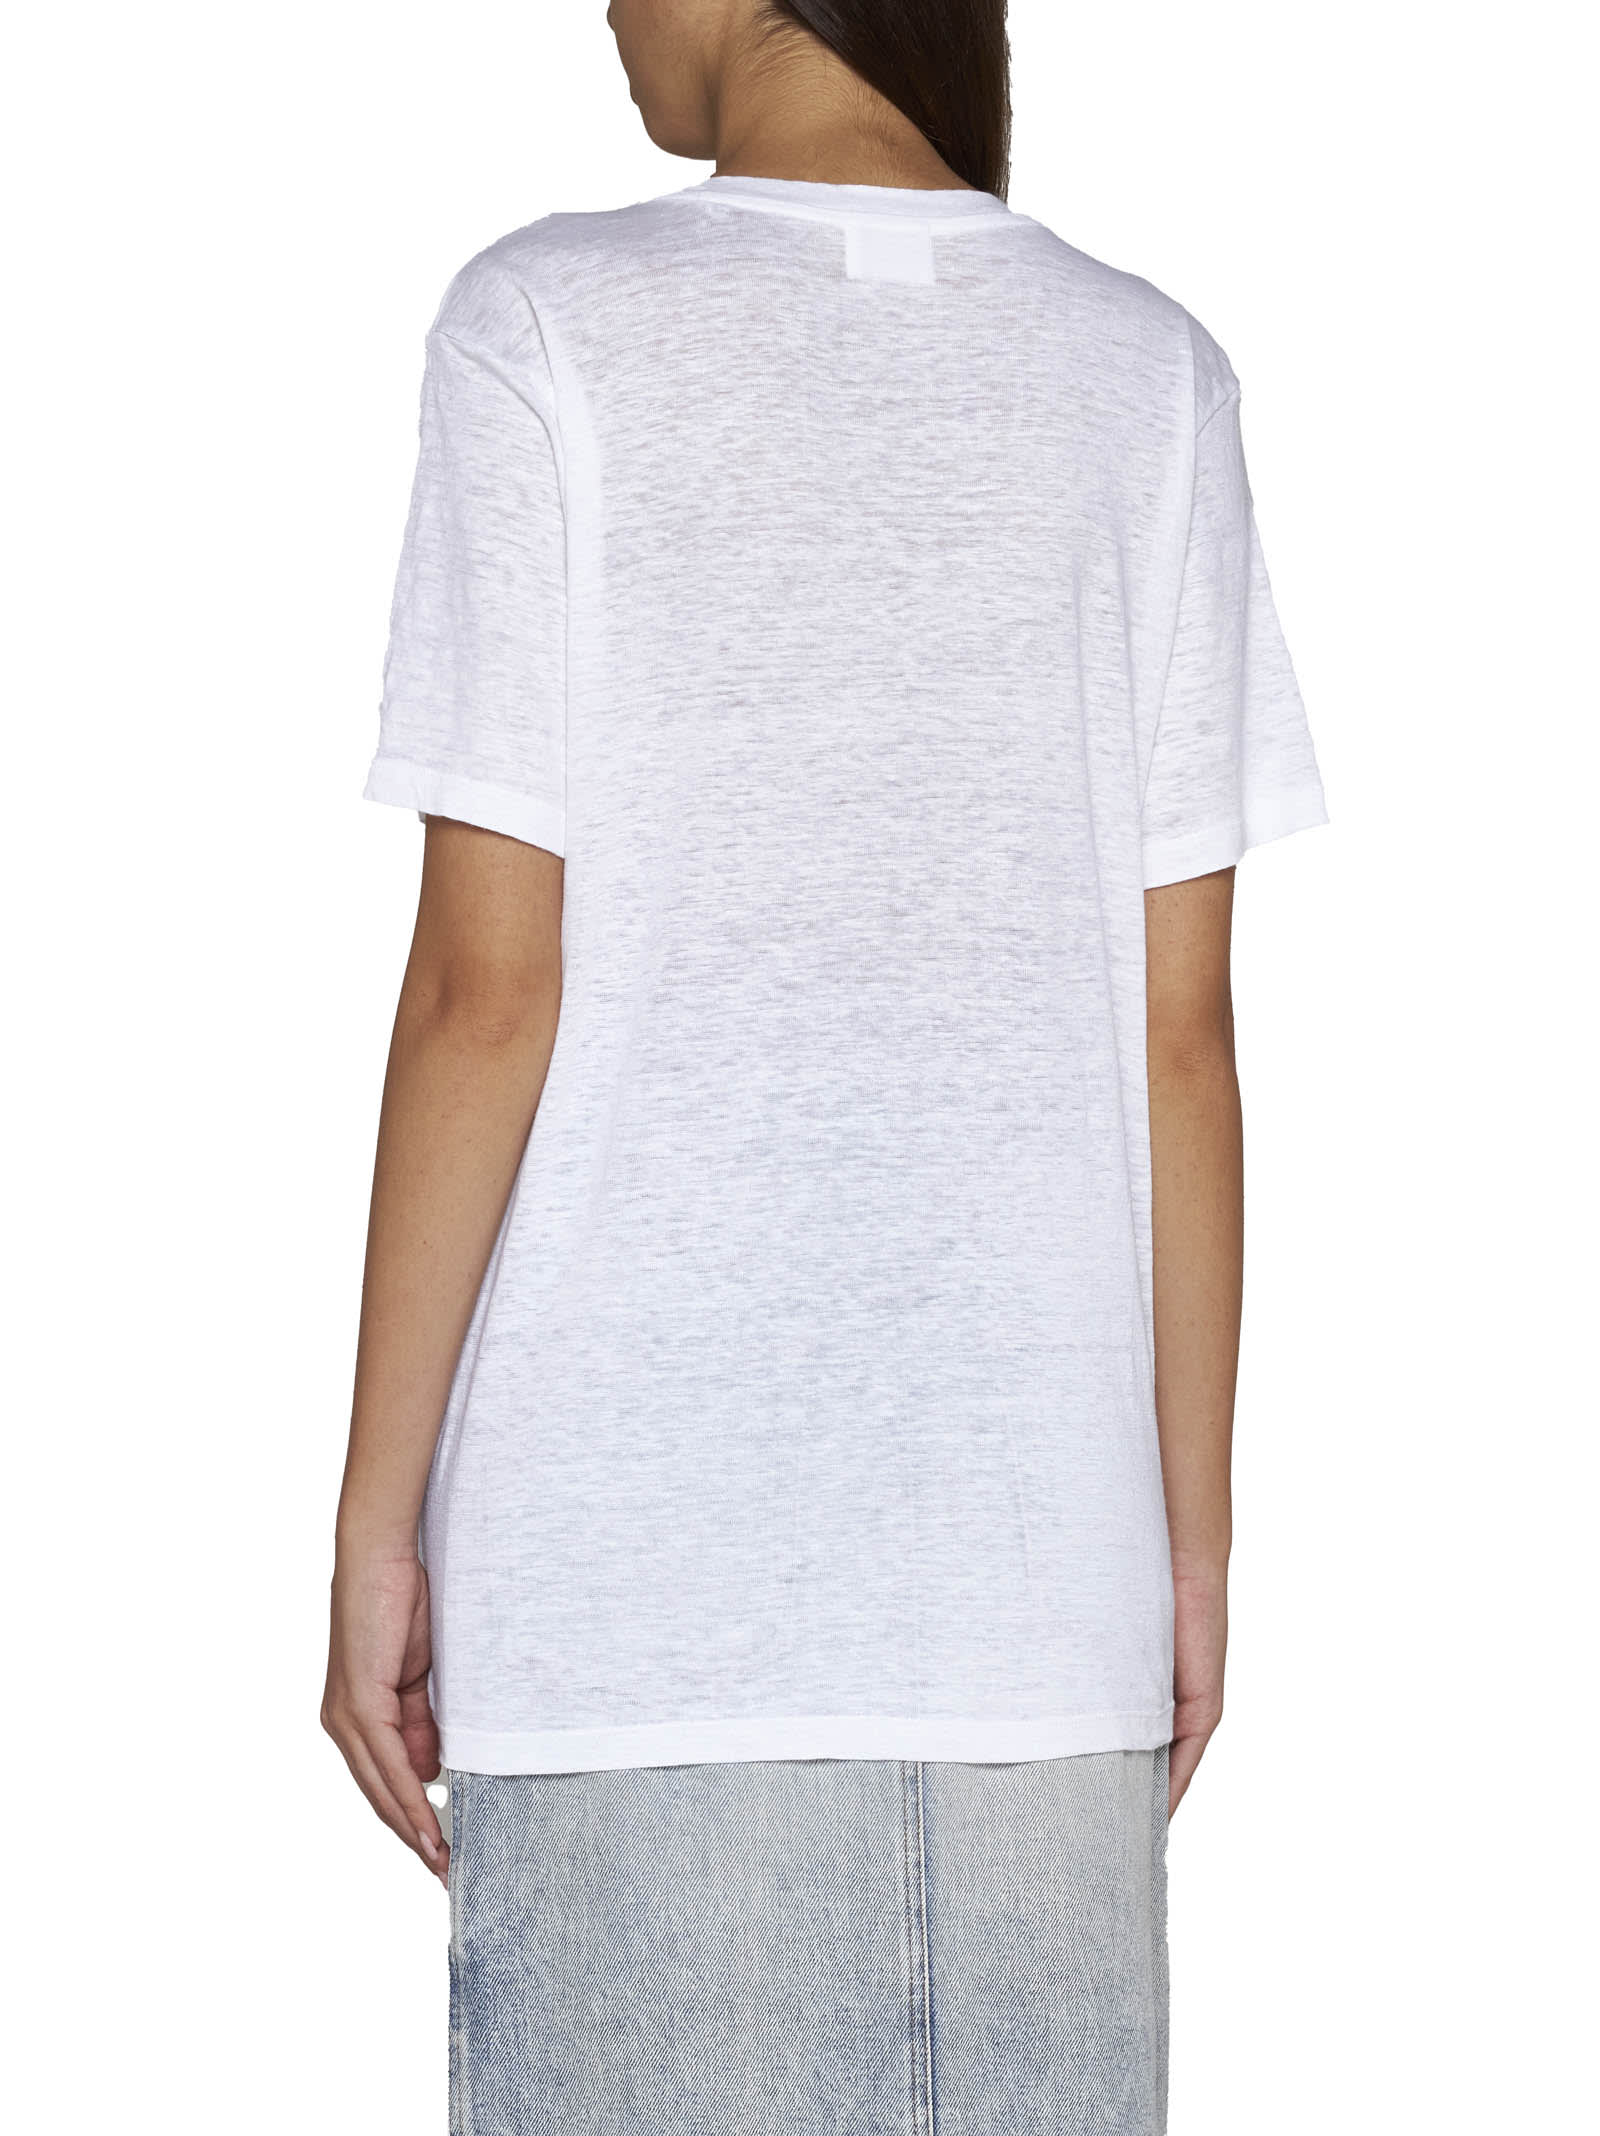 Shop Marant Etoile T-shirt In White